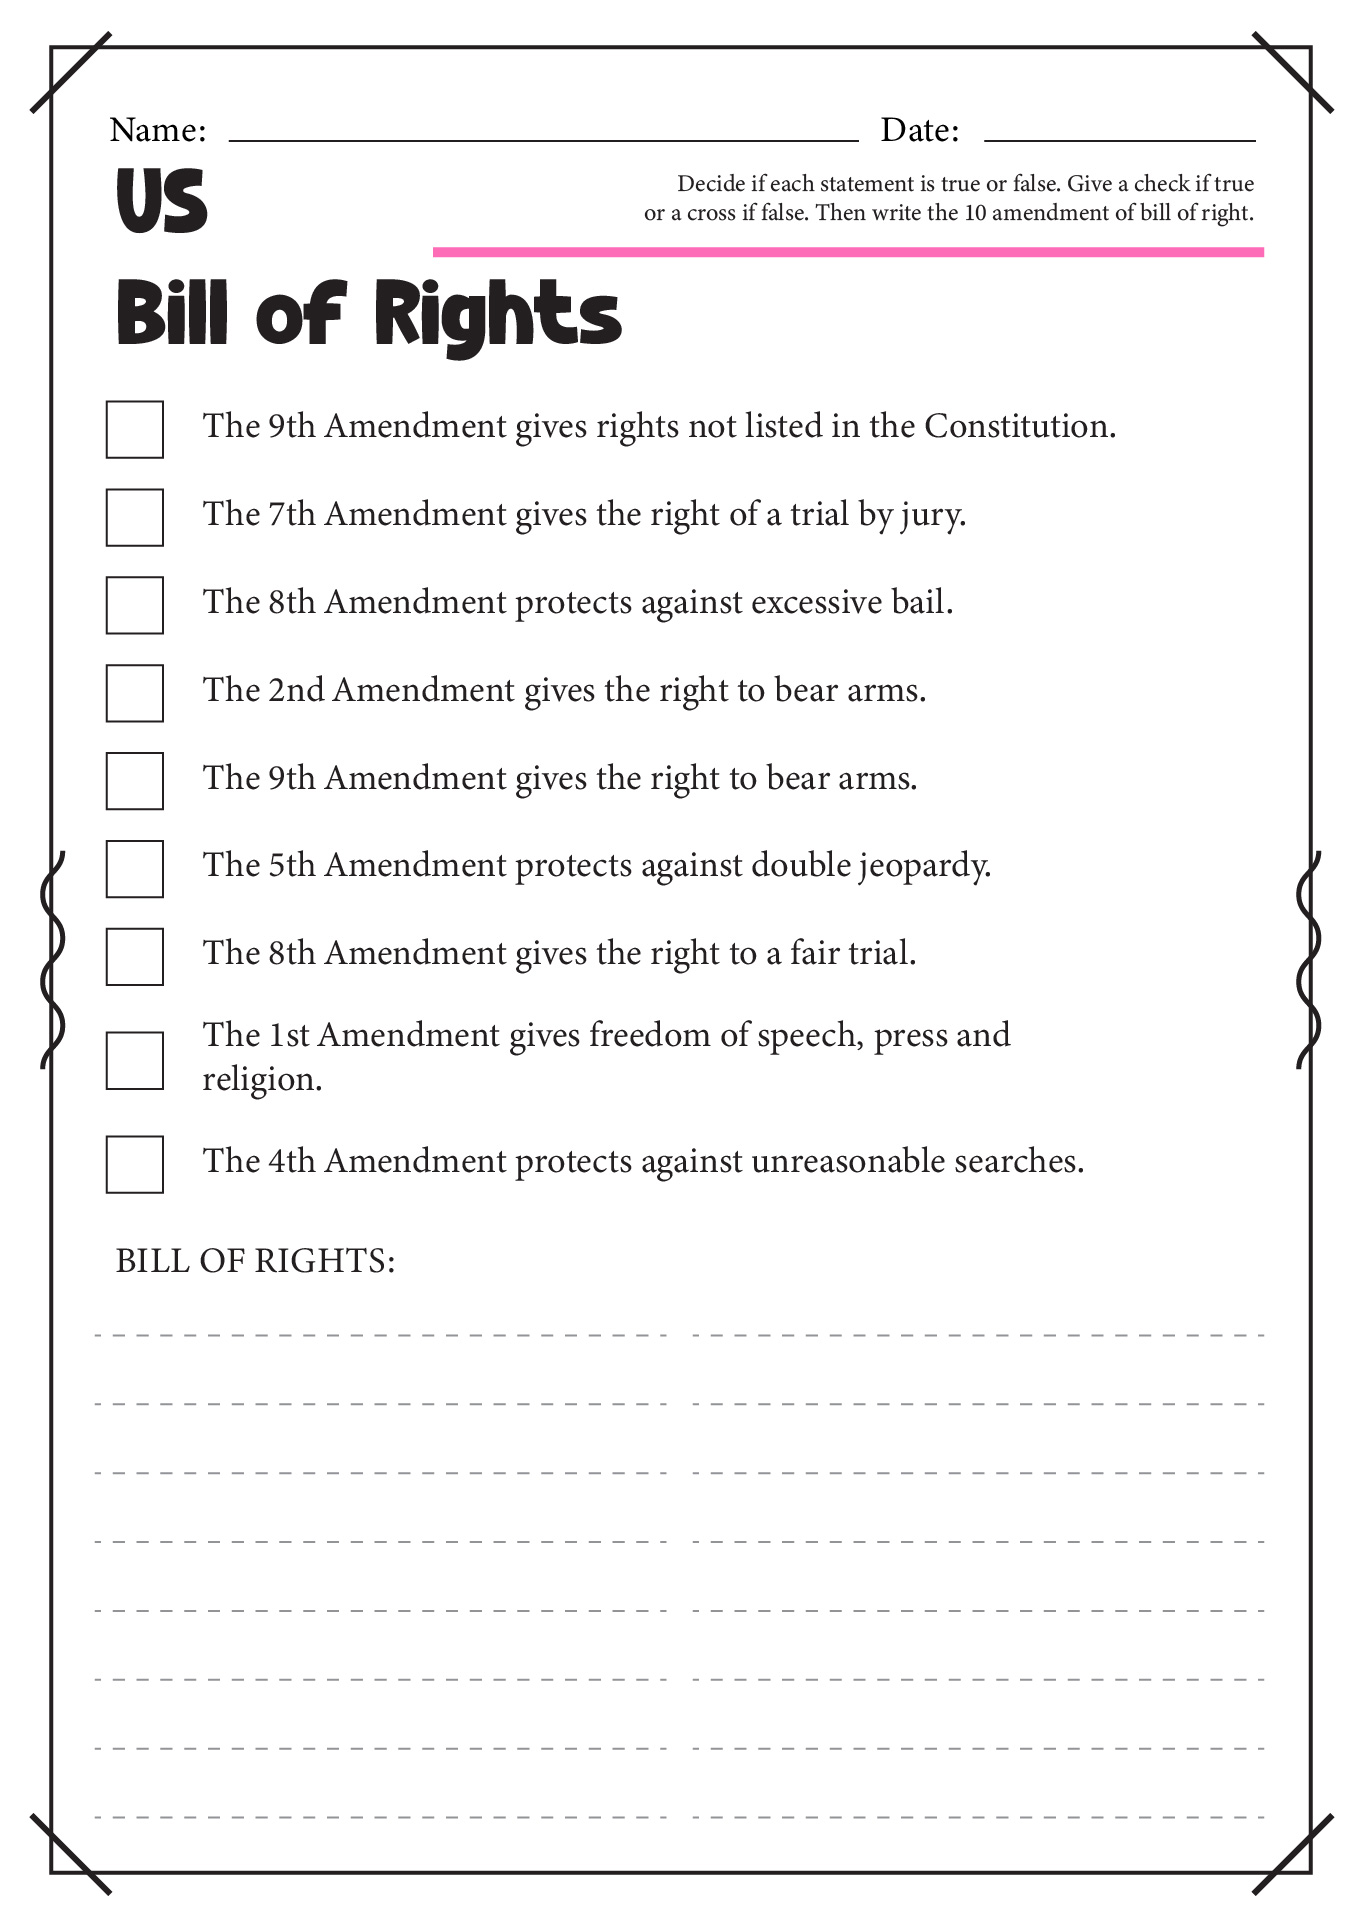 Us Bill of Rights Worksheet Image